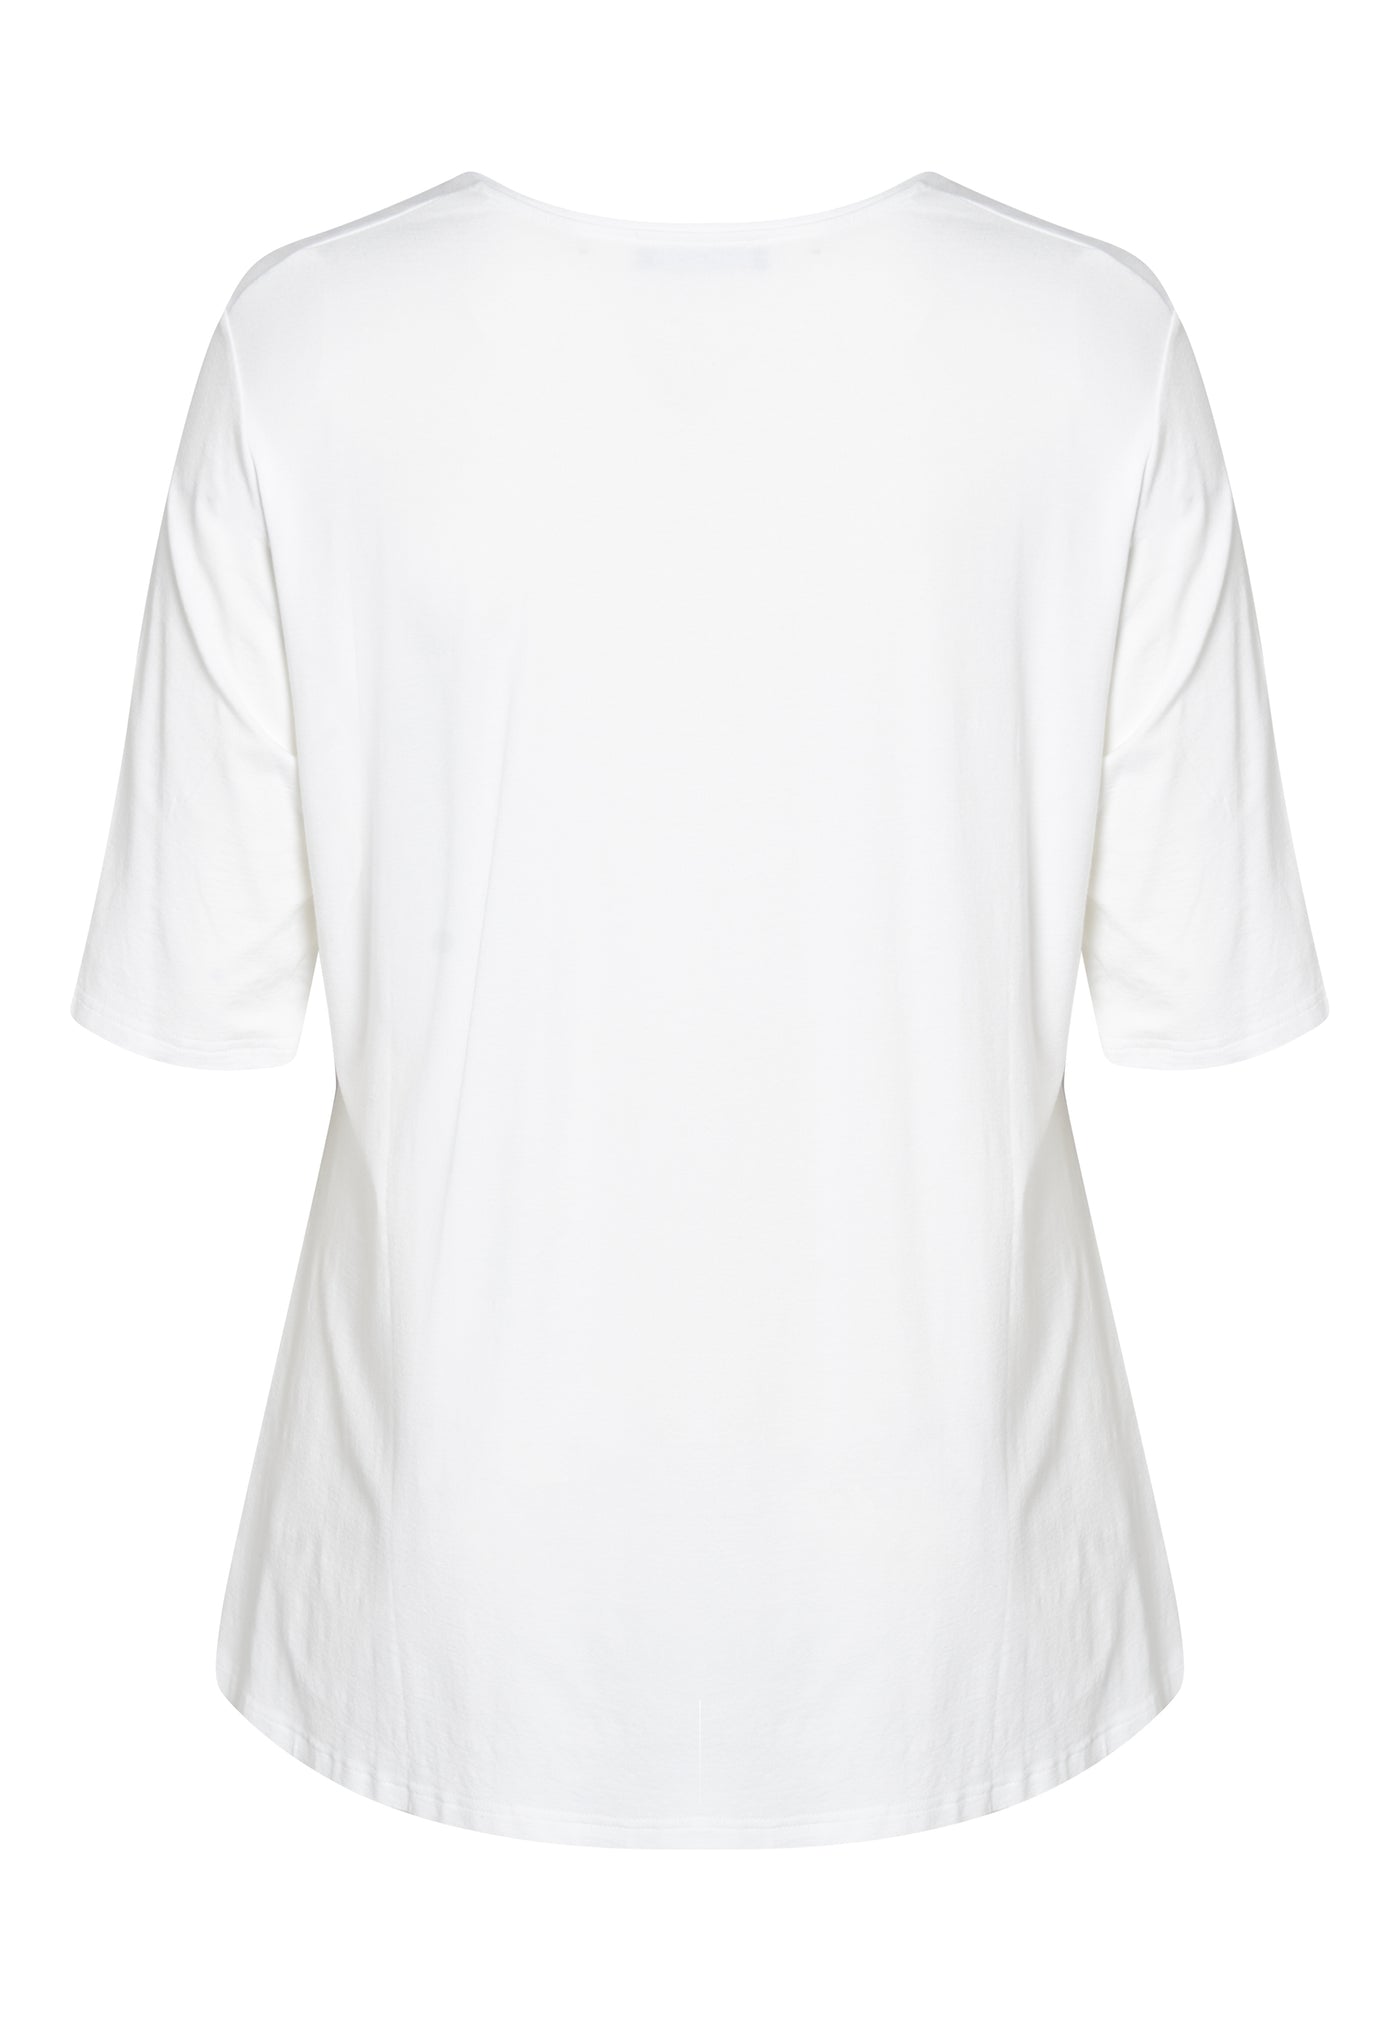 Sempre Piu SEShirt NOOS Skjortebluser 002 Optical white